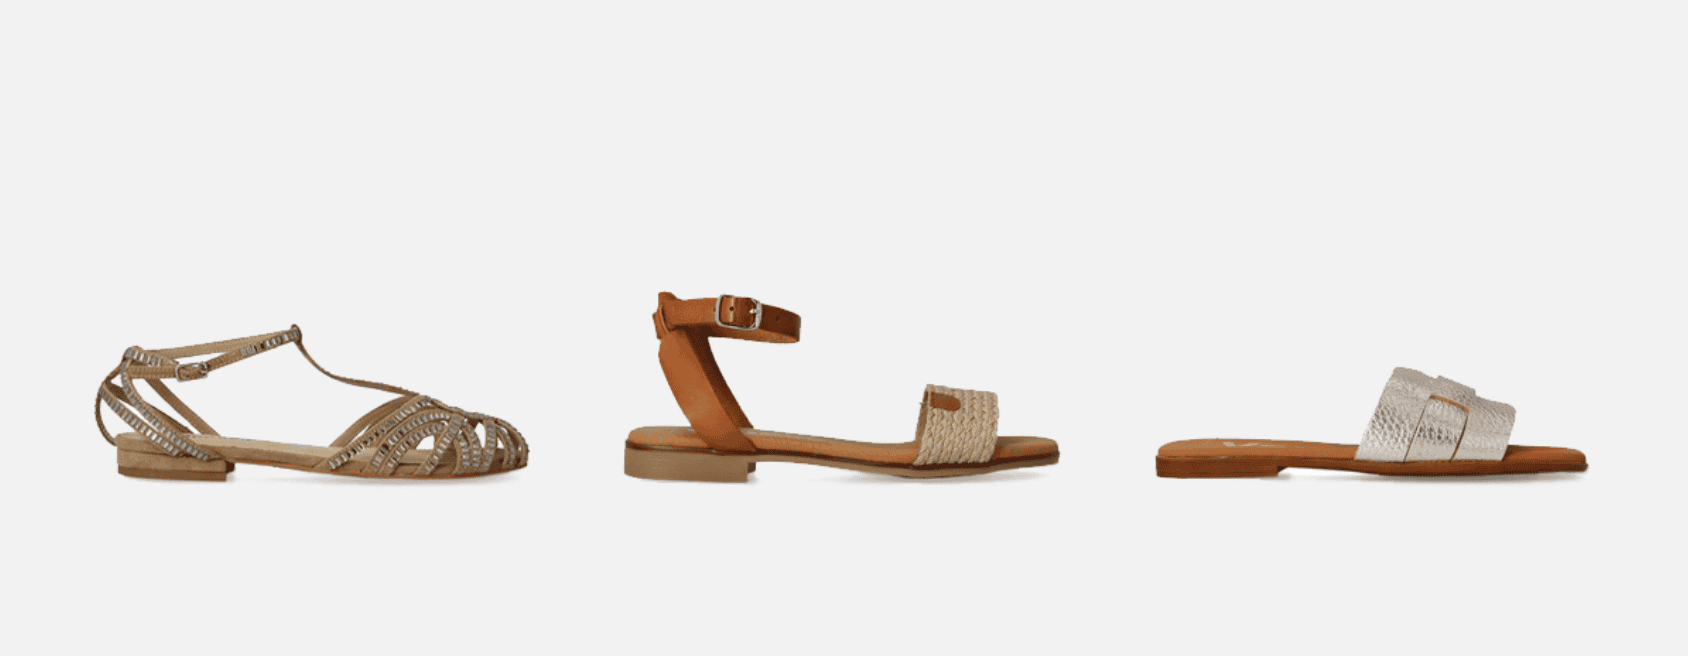 Sandalias plataforma mujer vanessa calzados zapatos verano